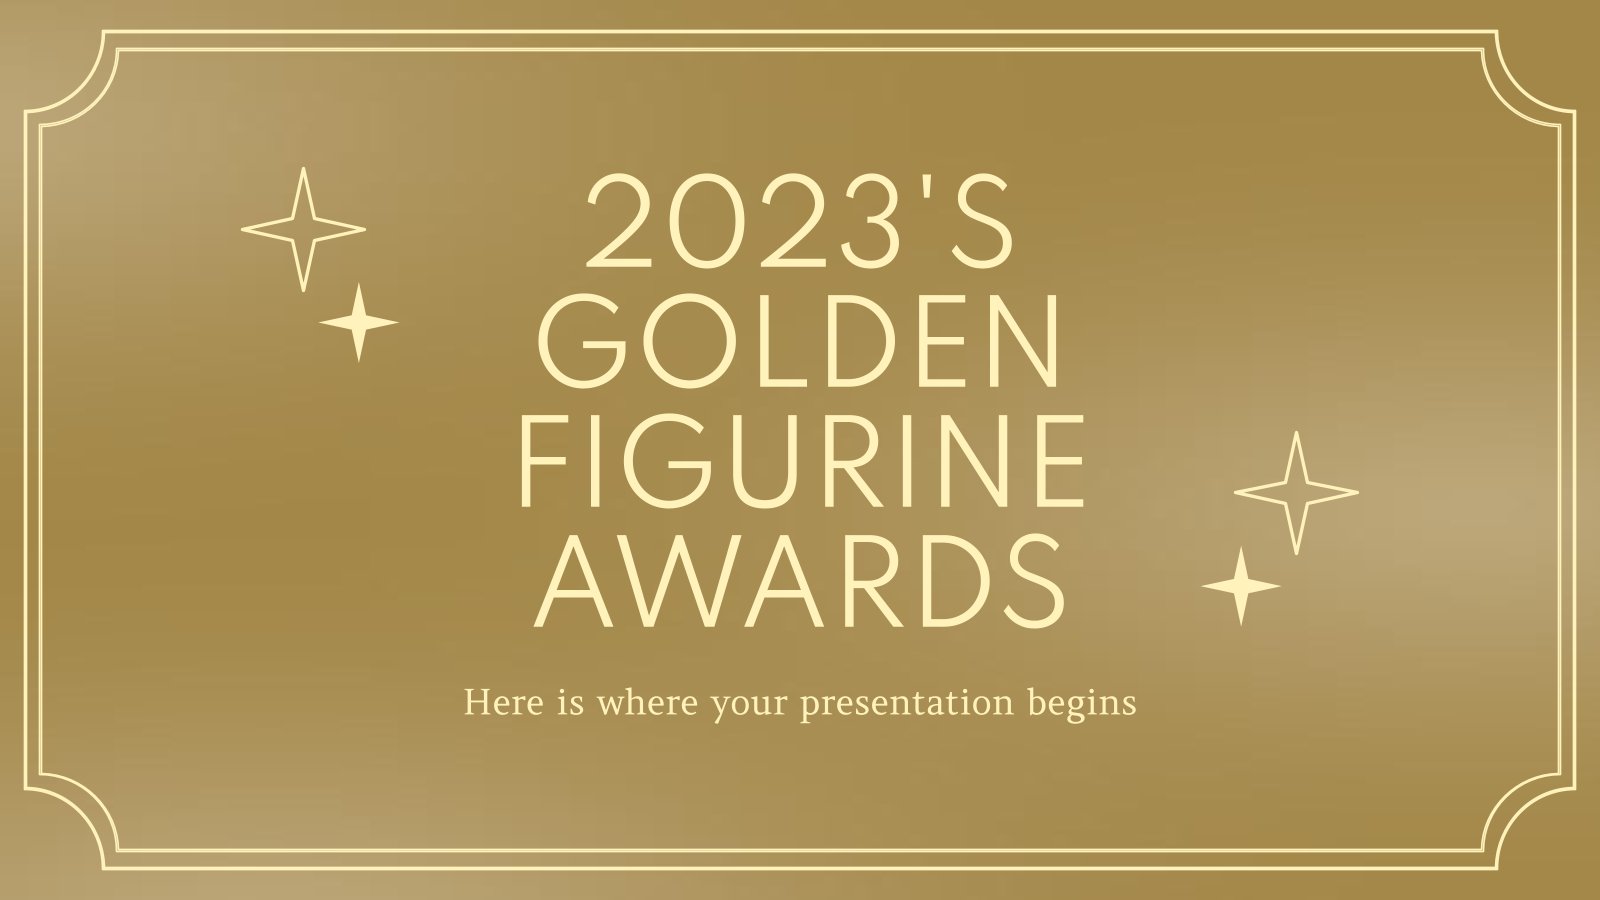 2023's Golden Figurine Awards presentation template 